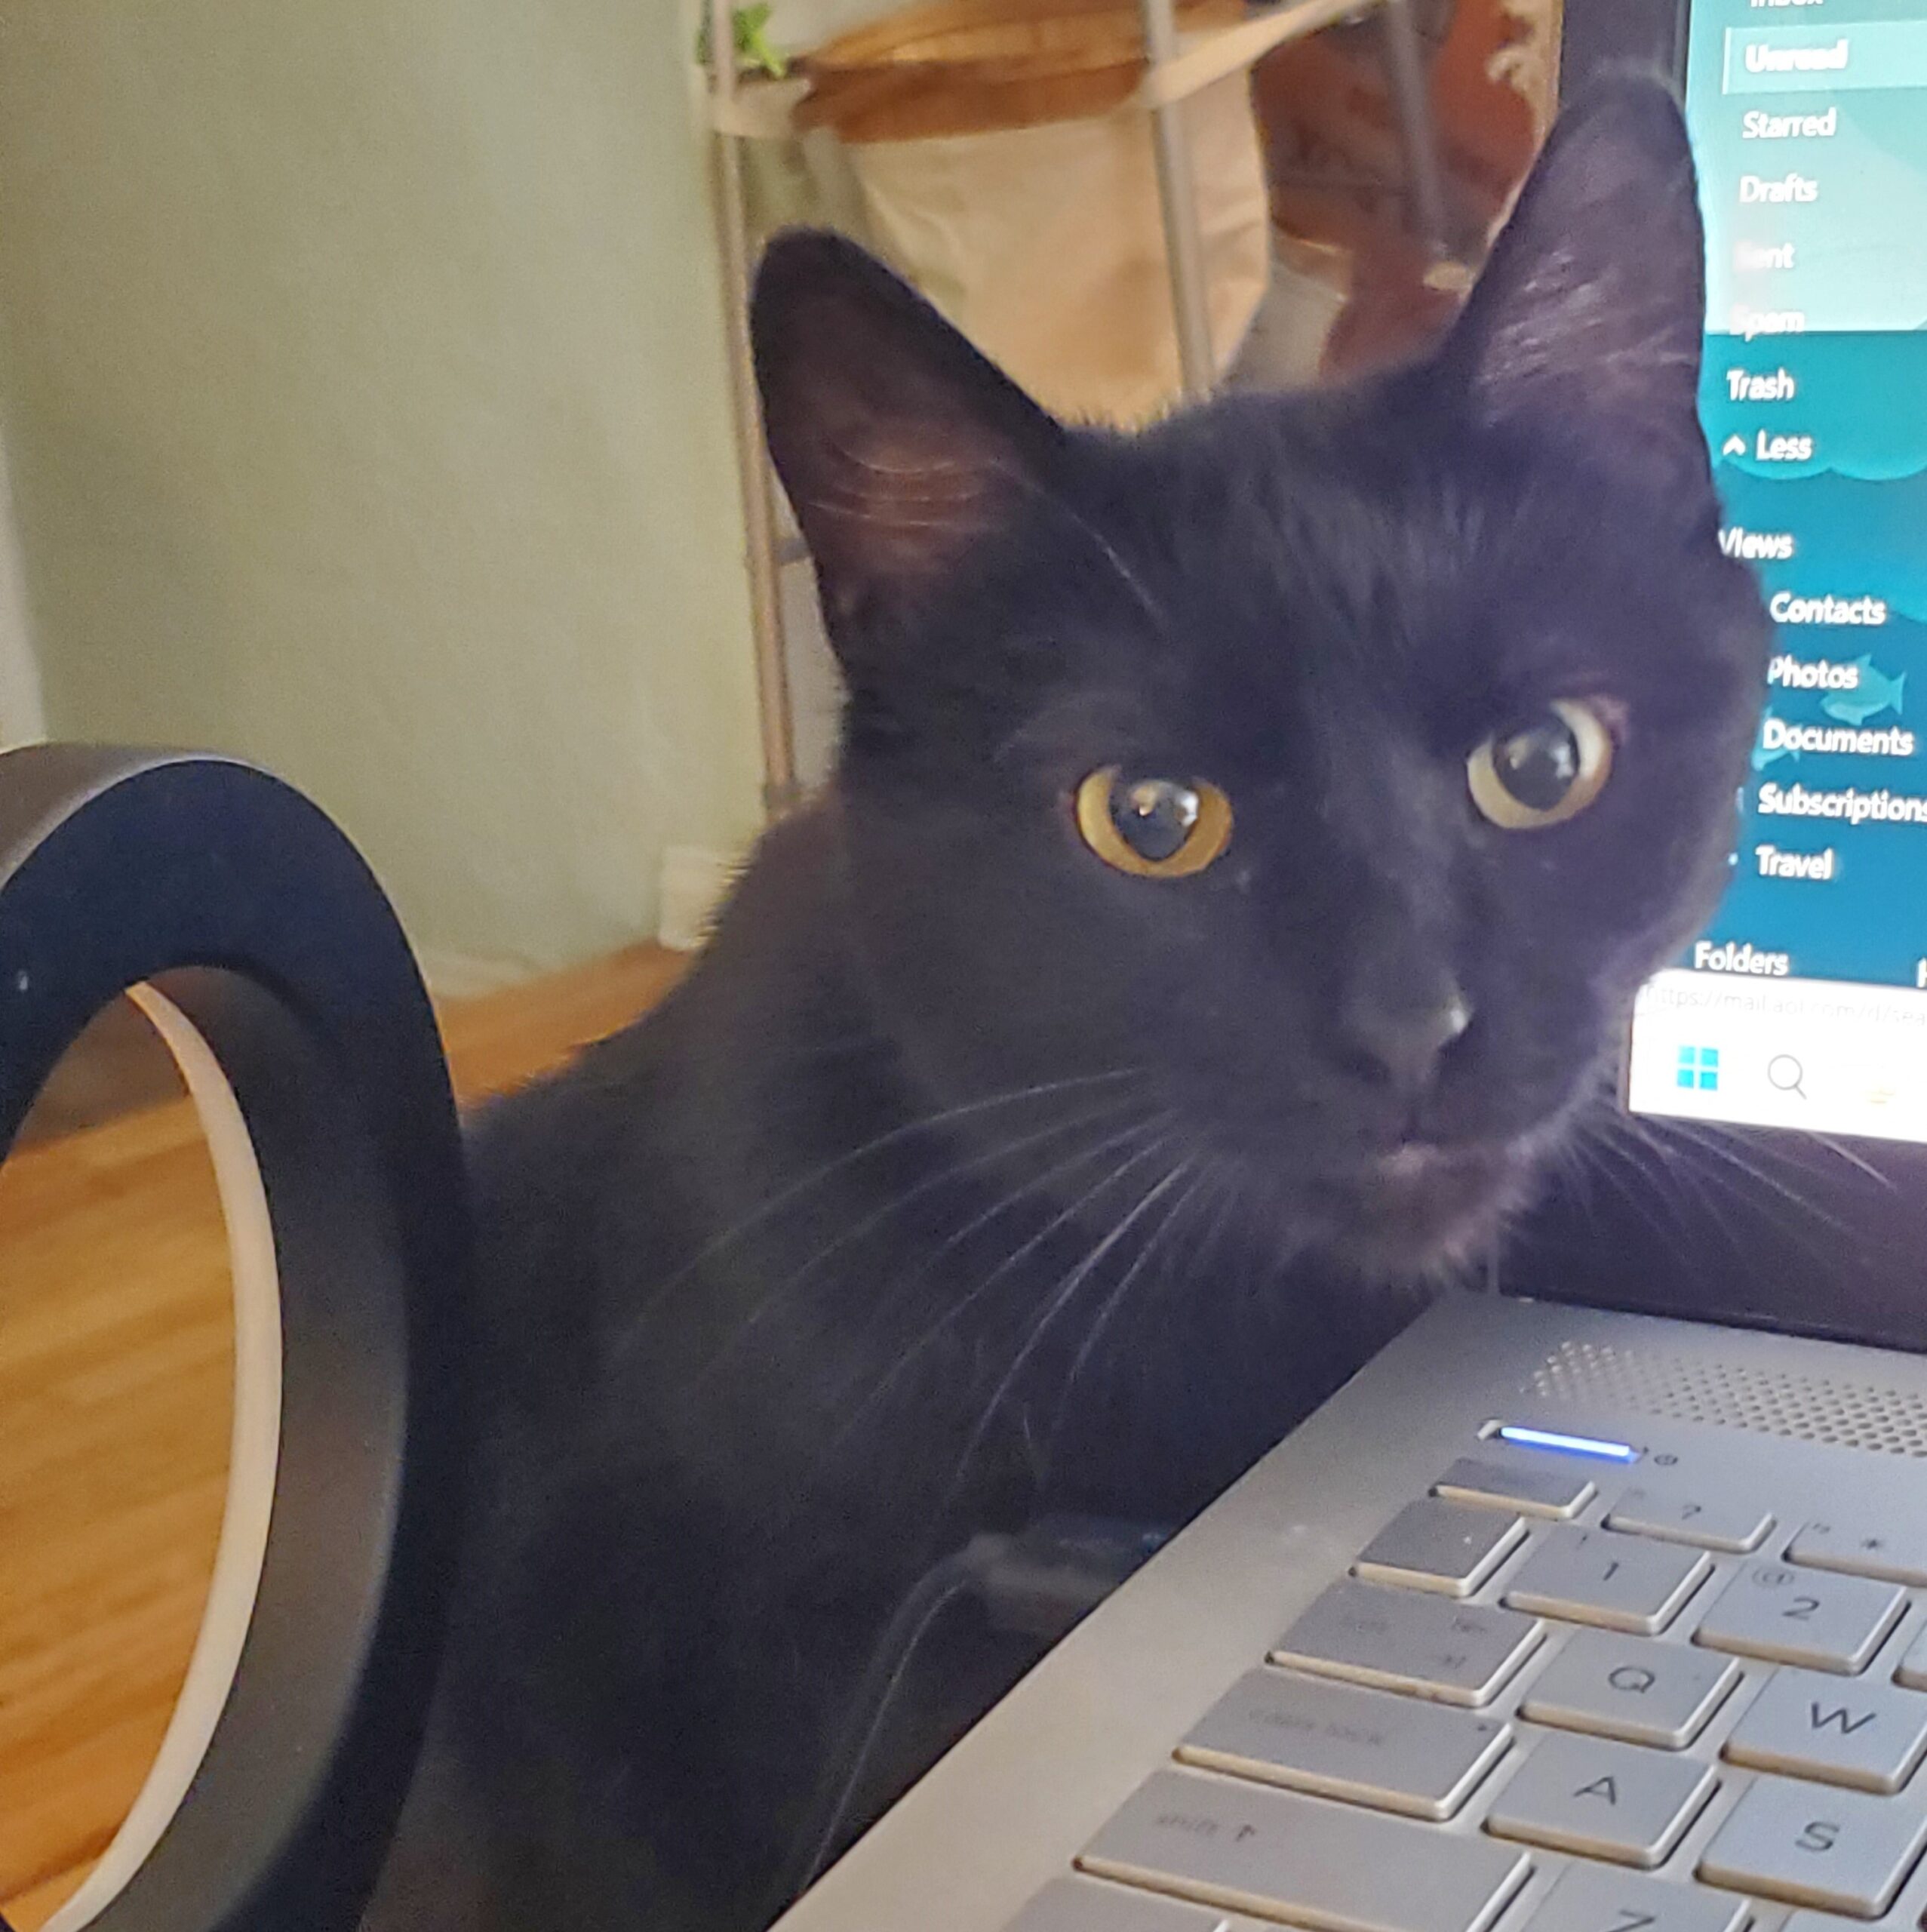 A black cat sits next to a laptop